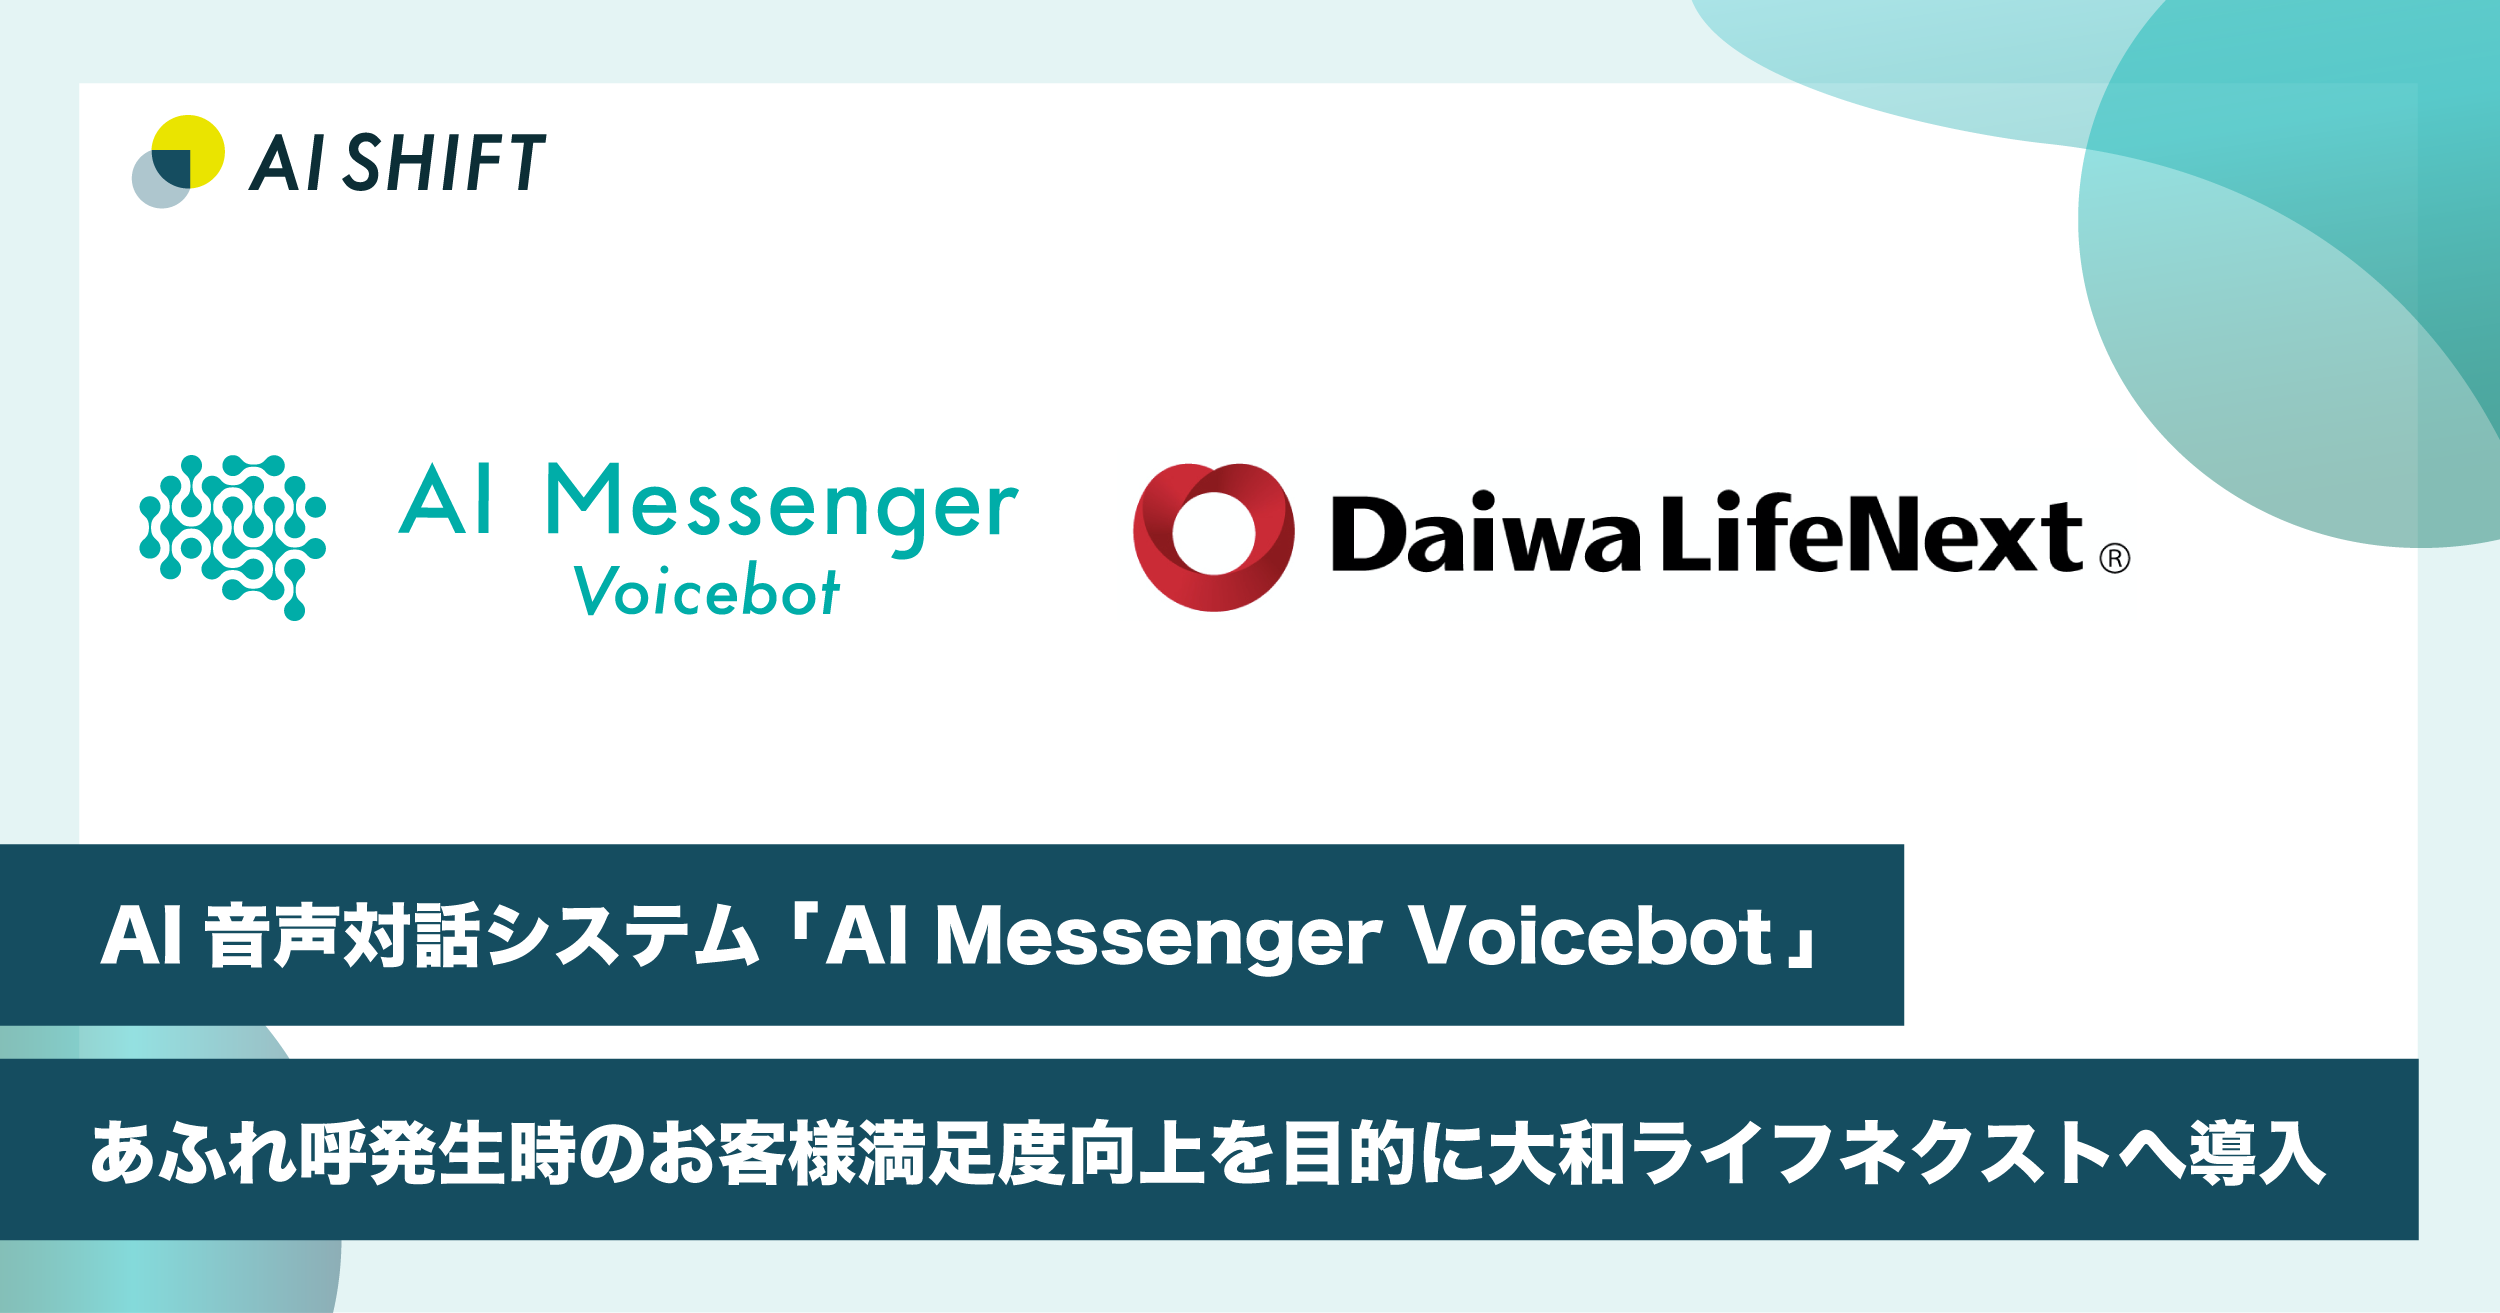 AI自動音声対話システムAI Messenger Voicebot 電話集中あふれ呼時のお客様満足度向上を目的に 大和ライフネクストへ導入 株式会社AI Shift